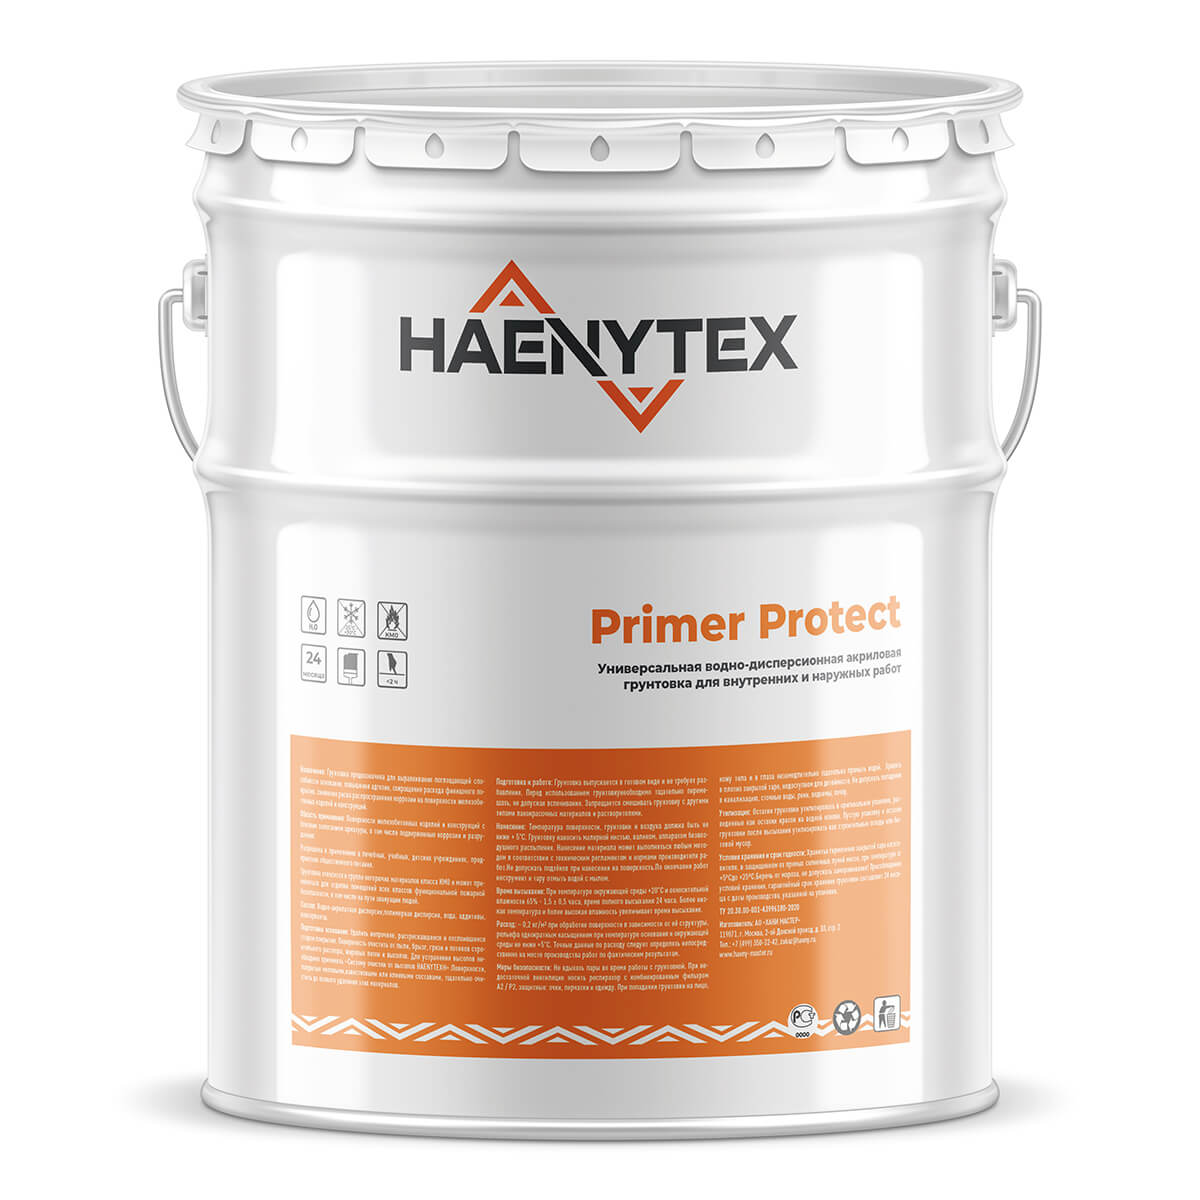 HAENYTEX® Primer Protect